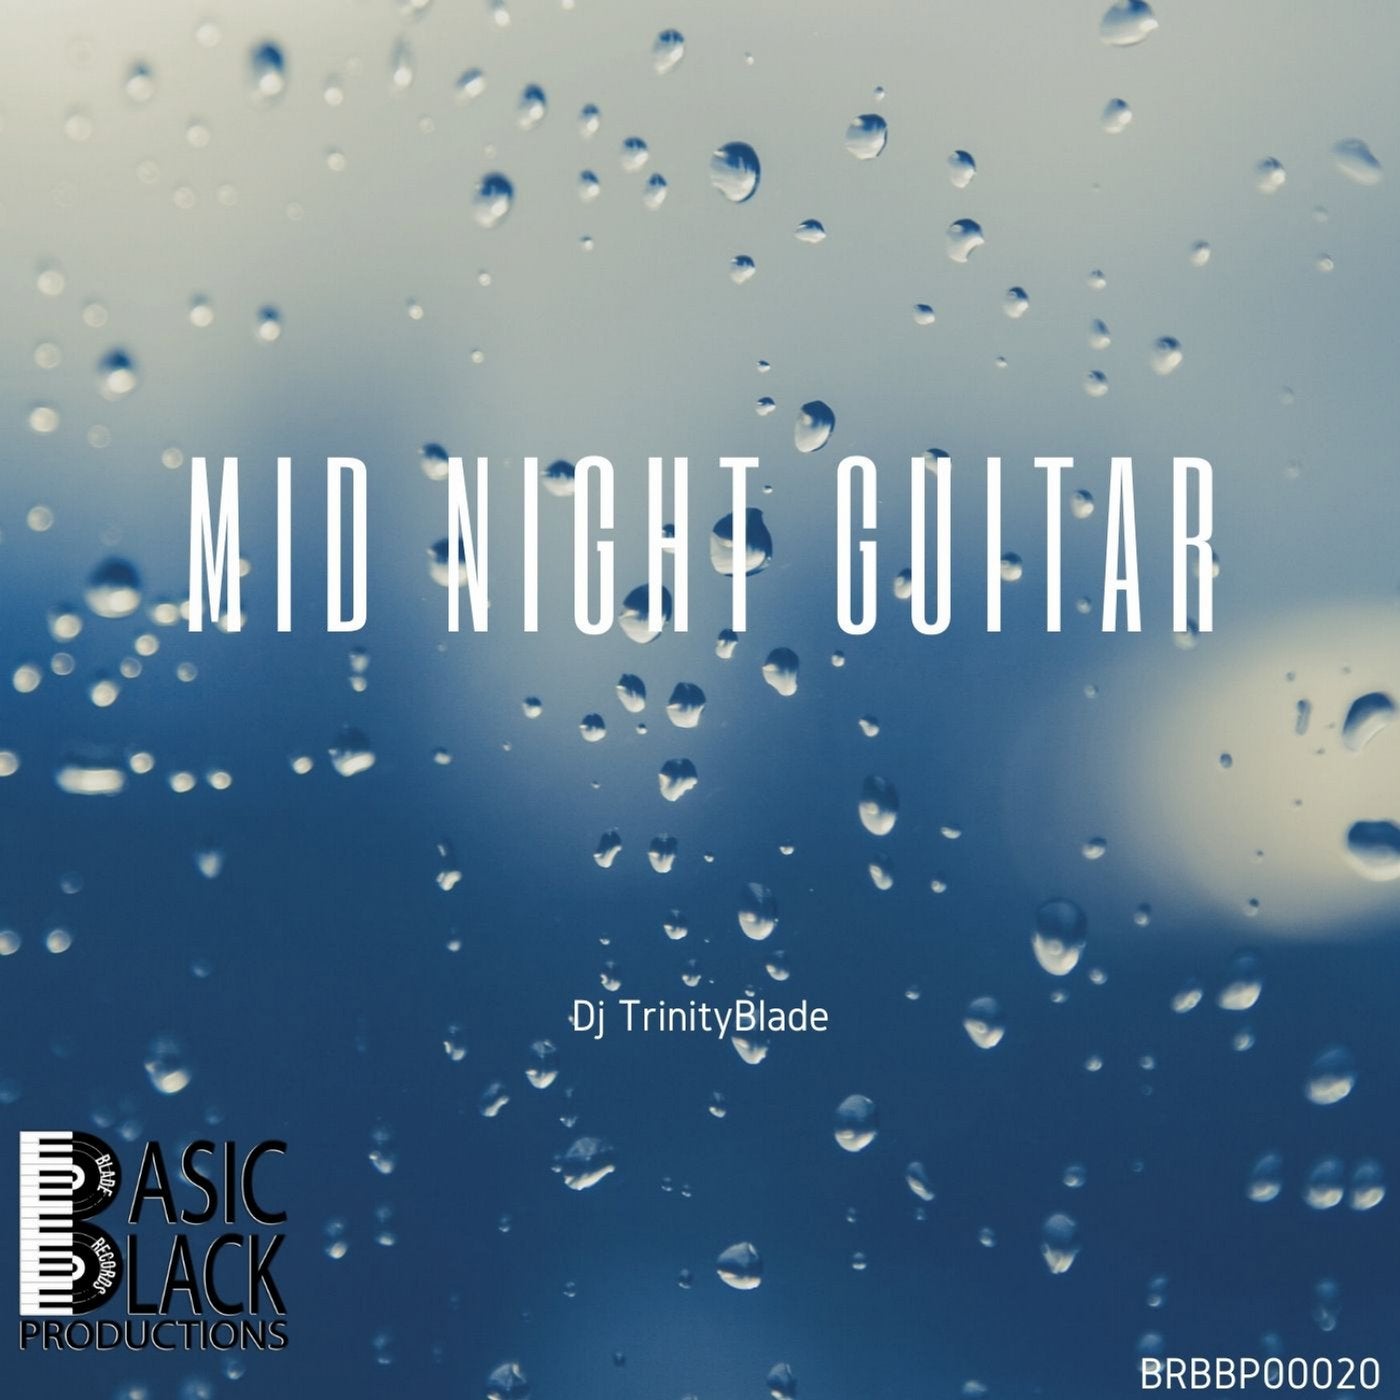 Mid Night Guitar